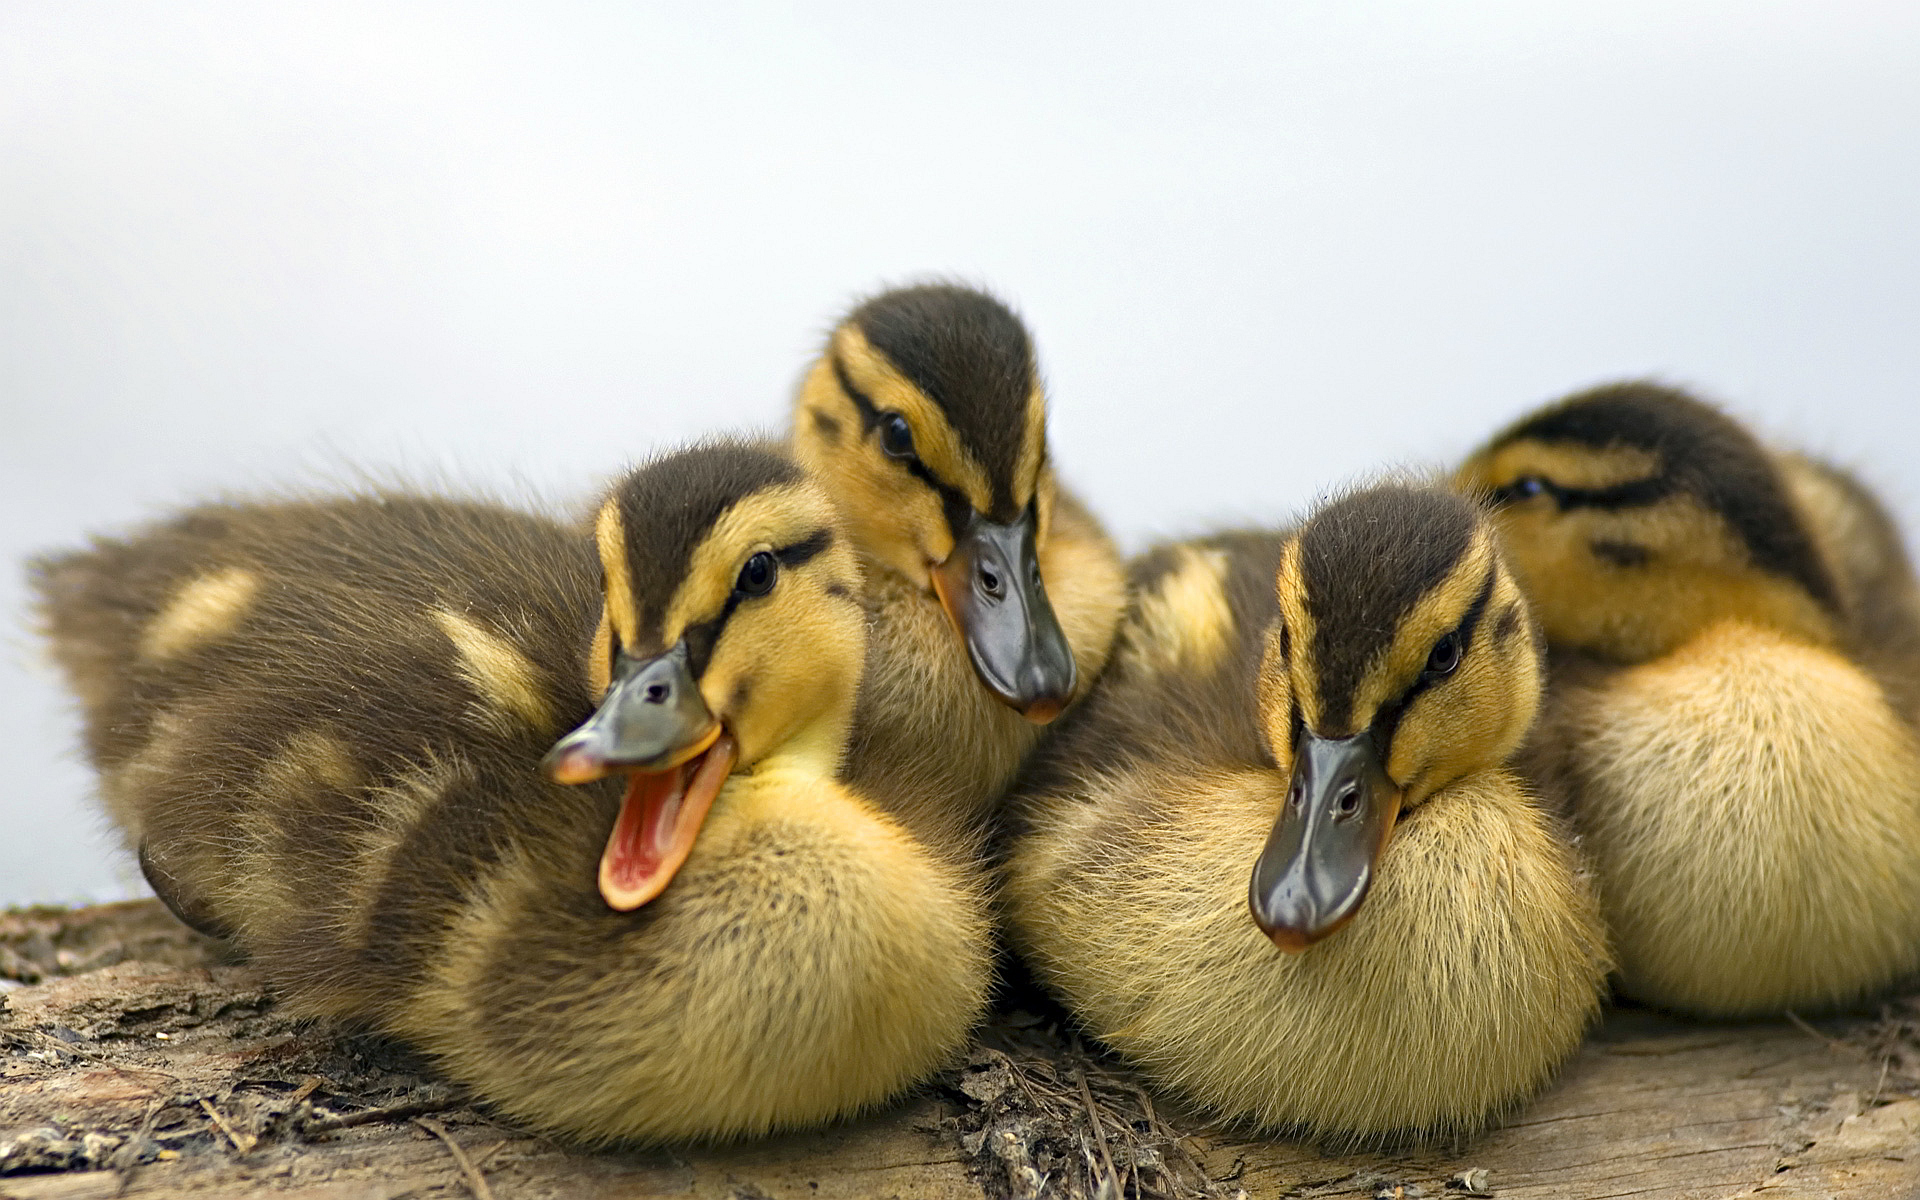 Fluffy ducklings